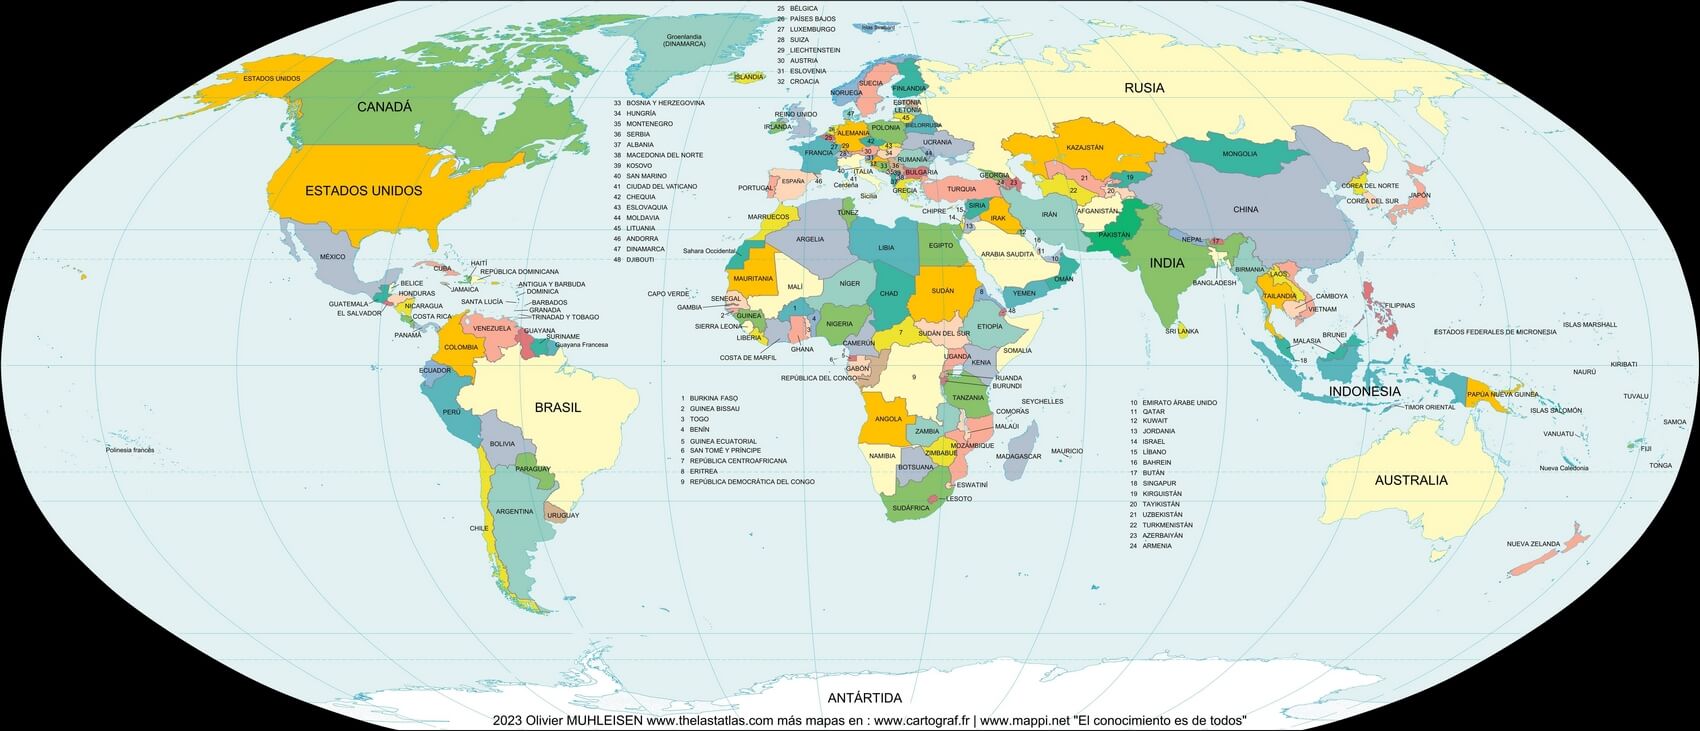 Mapa mundi com países em espanhol